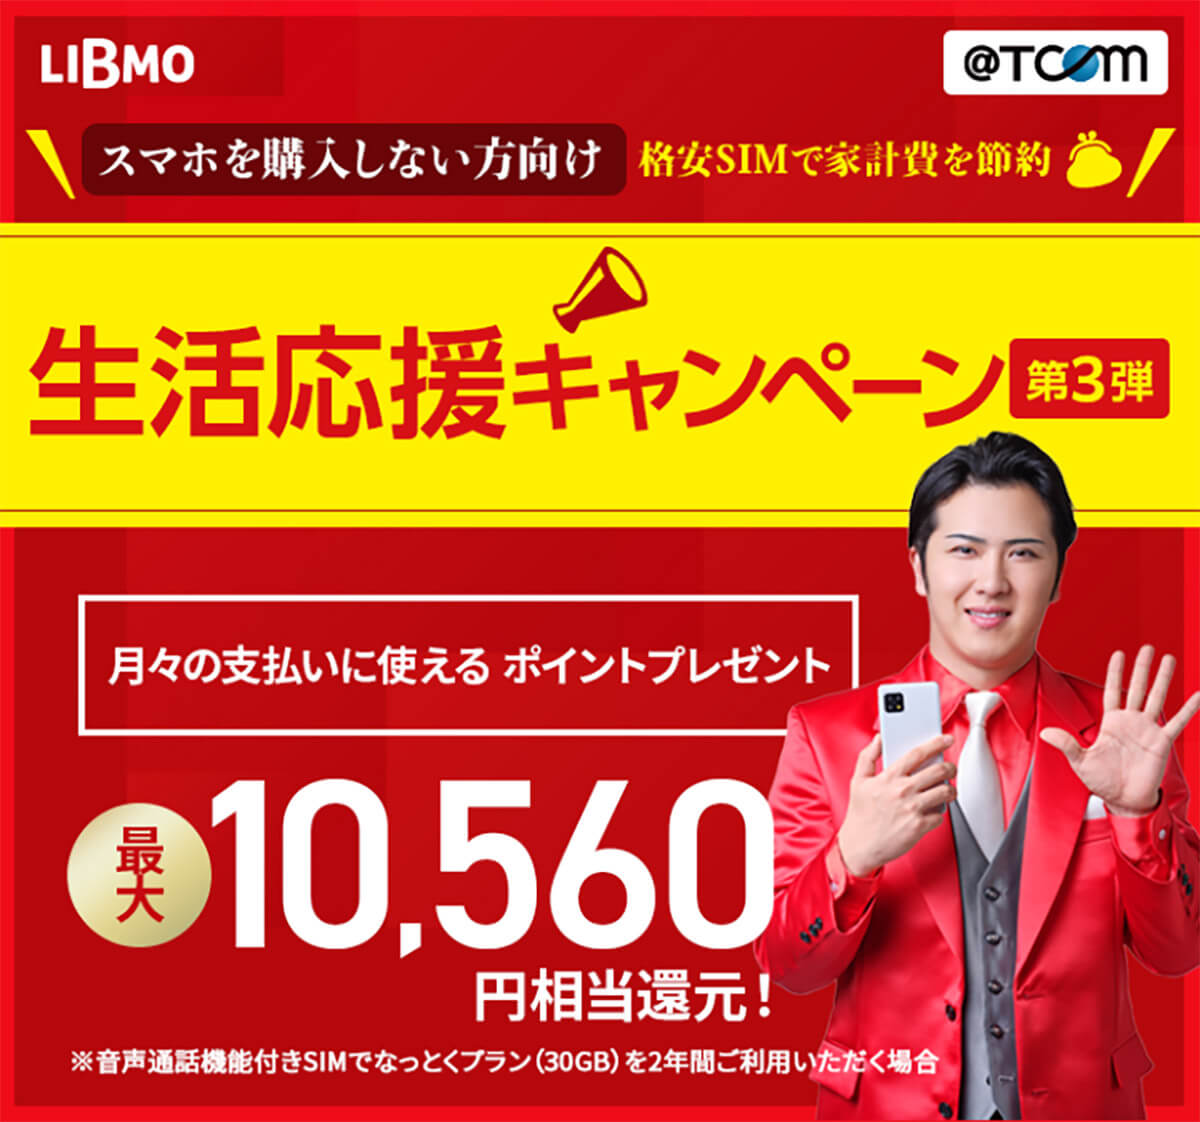 「LIBMO」はスマホ大特価セールでスマホ代金が一括1円！3